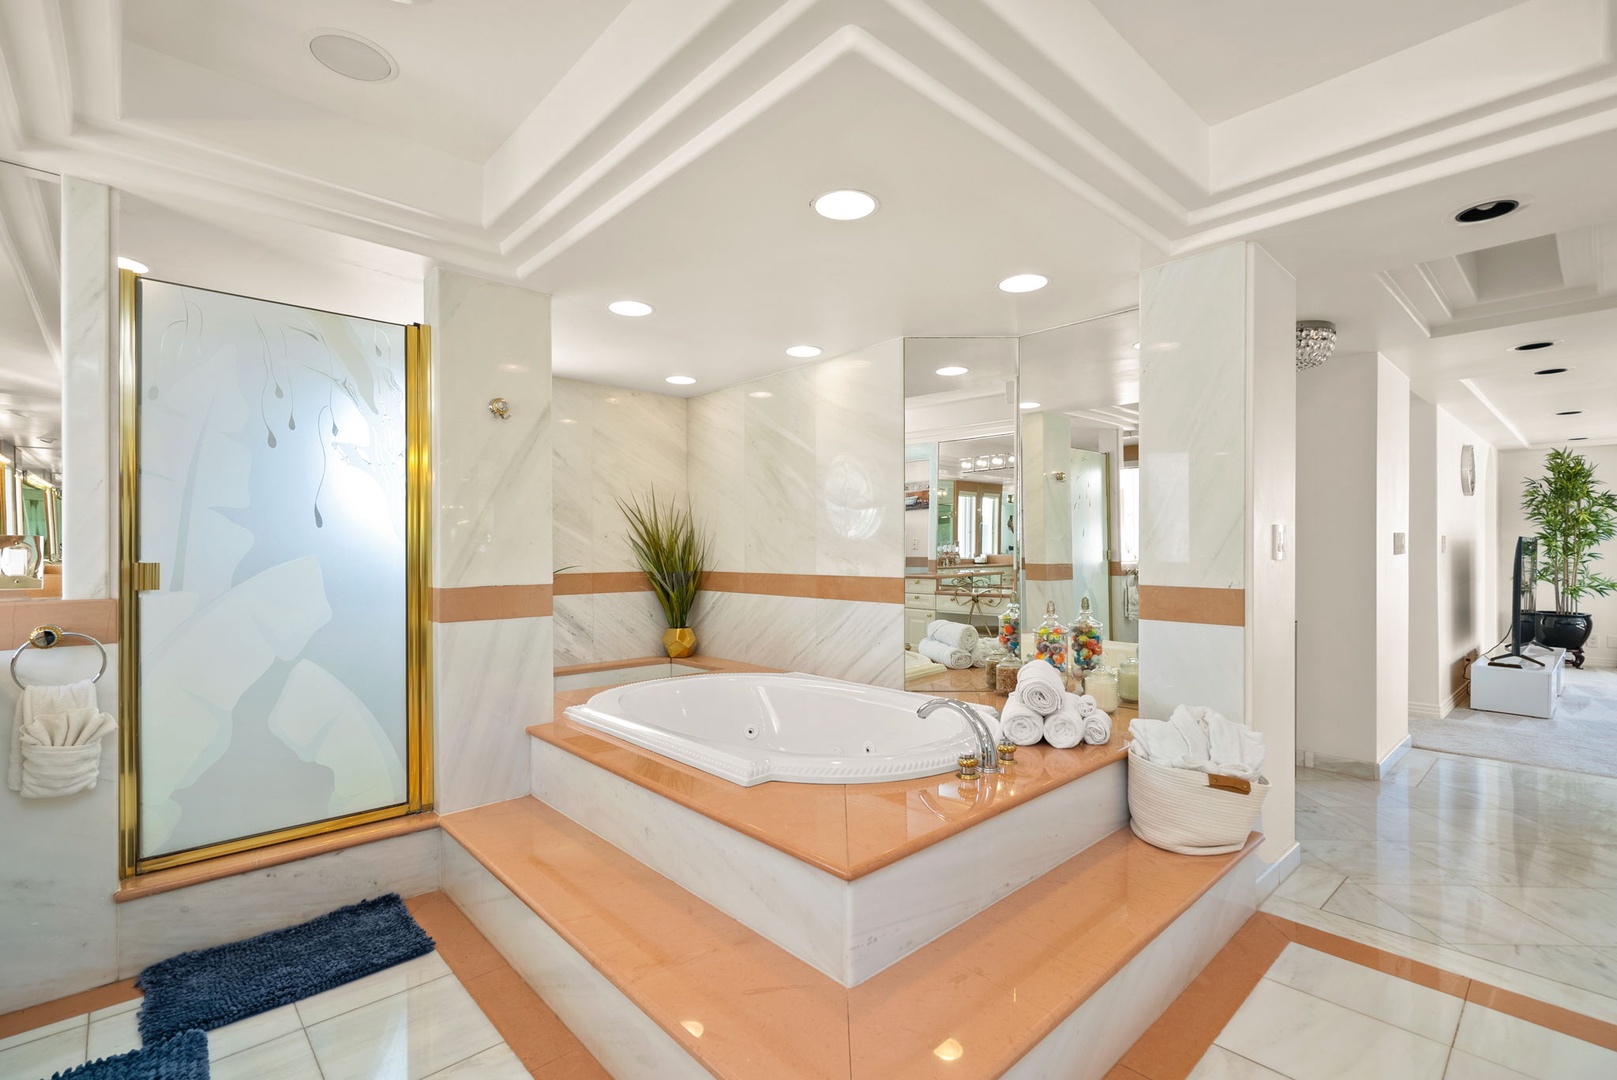 Honolulu Vacation Rentals, Hawaii Ridge Getaway - Spa-like ensuite bathroom with a large soaking tub.